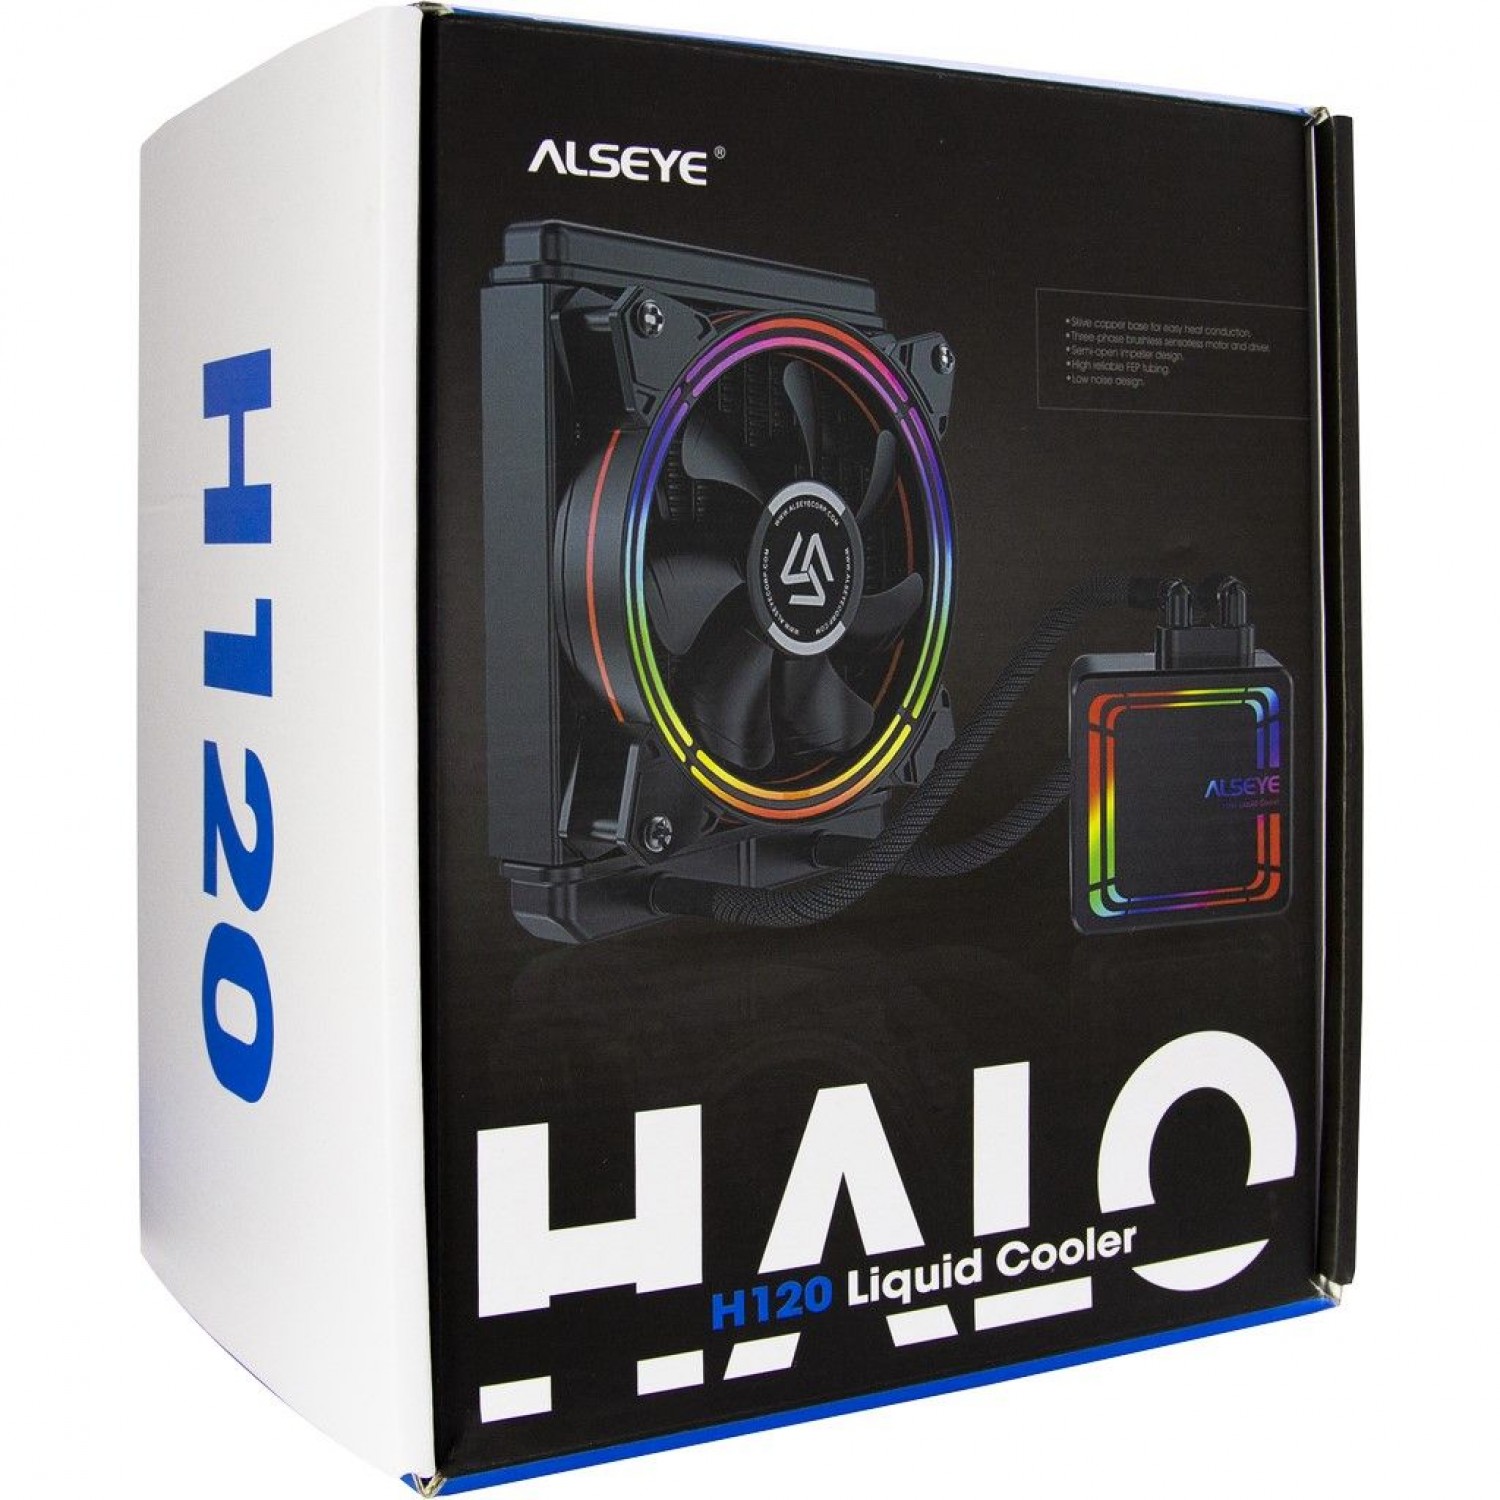 کولر پردازنده Alseye Halo H120-6